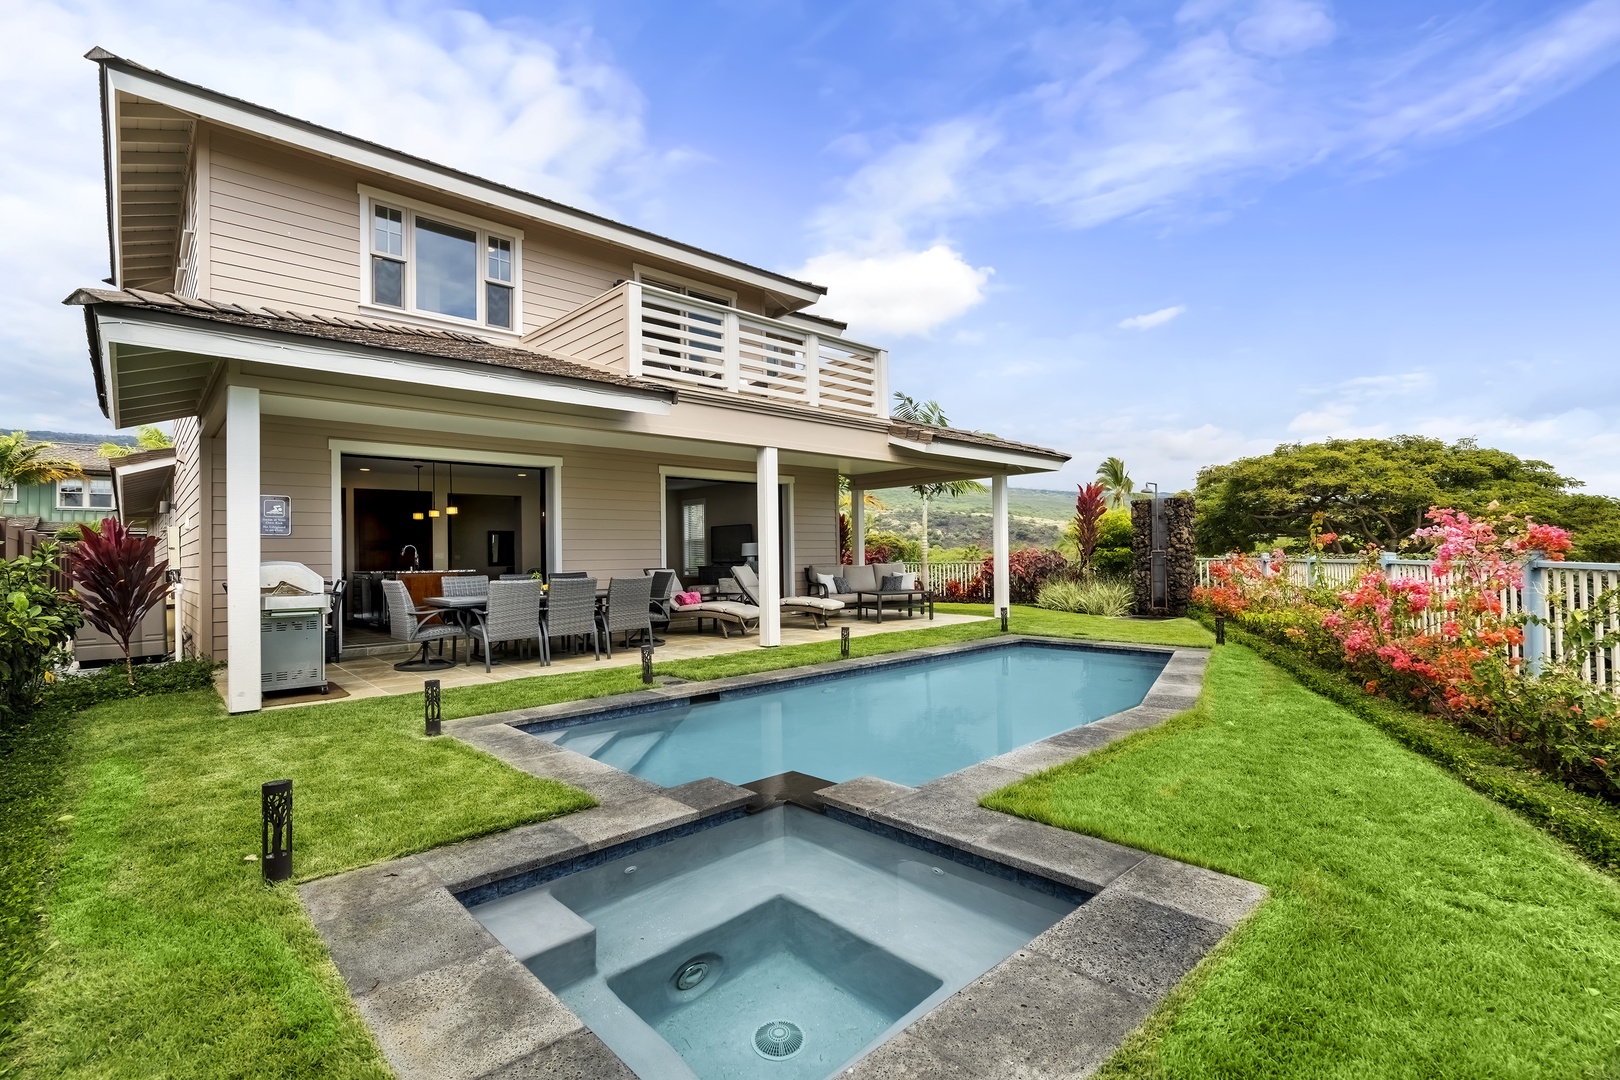 Kailua Kona Vacation Rentals, Green/Blue Combo - Melt into the hot tub at this beautiful property!